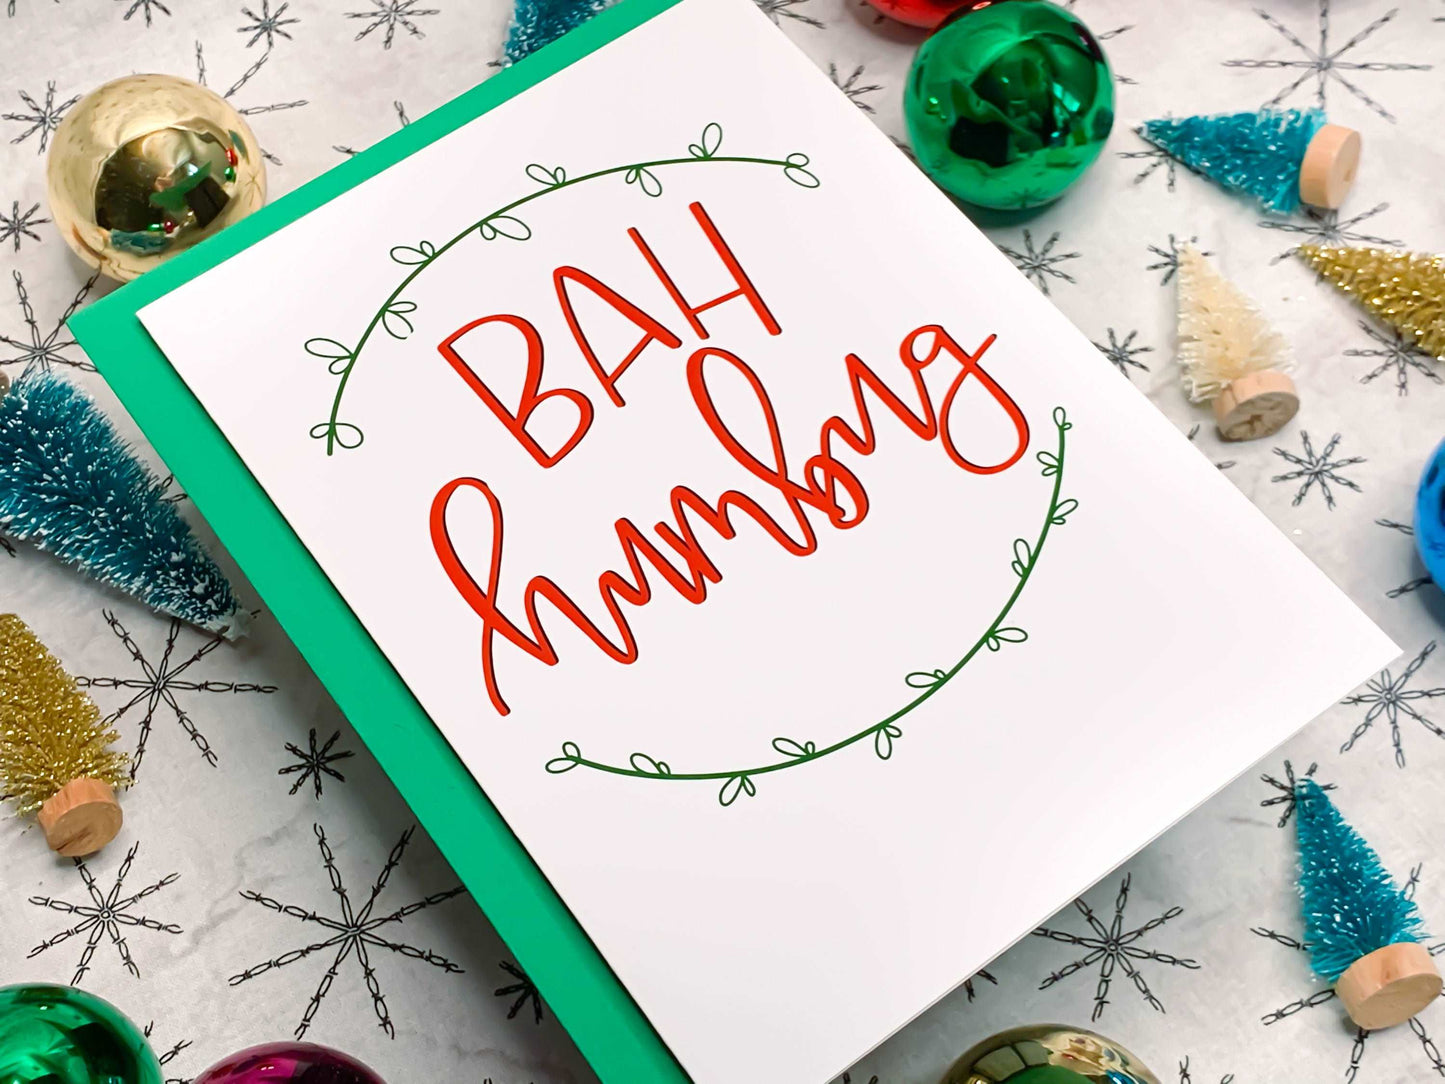 Bah Humbug Funny Christmas Card by StoneDonut Design